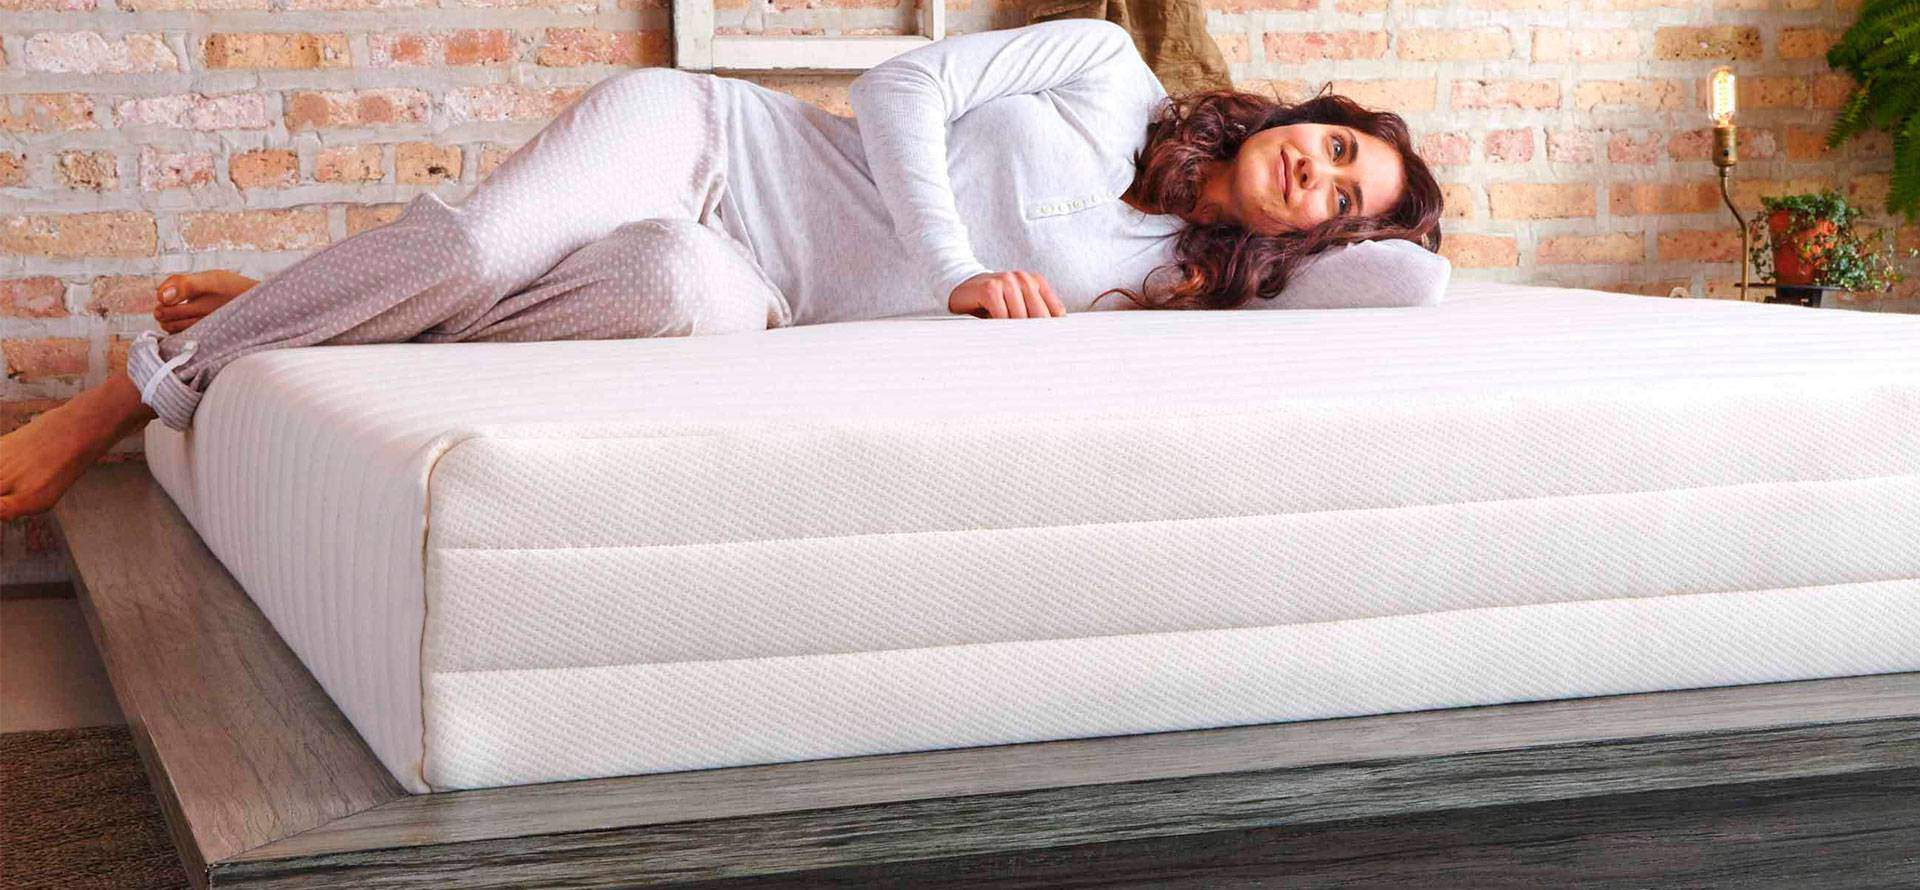 A woman sleeping on the latex mattress.